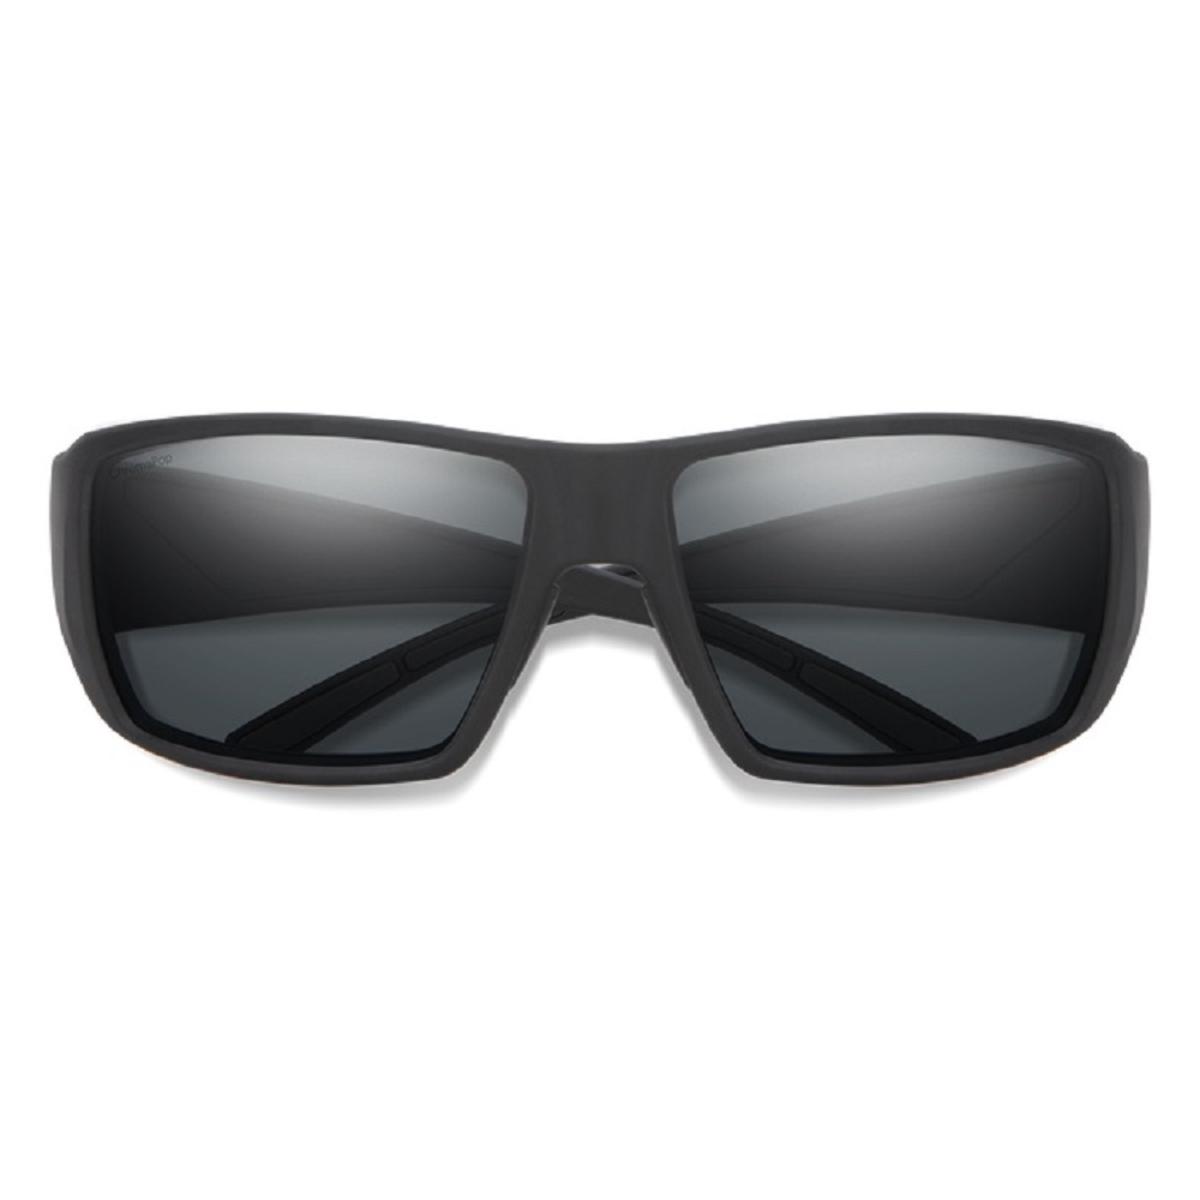 Smith Optics Guide's Choice Sunglasses ChromaPop Glass Polarized Gray - Matte Black Frame